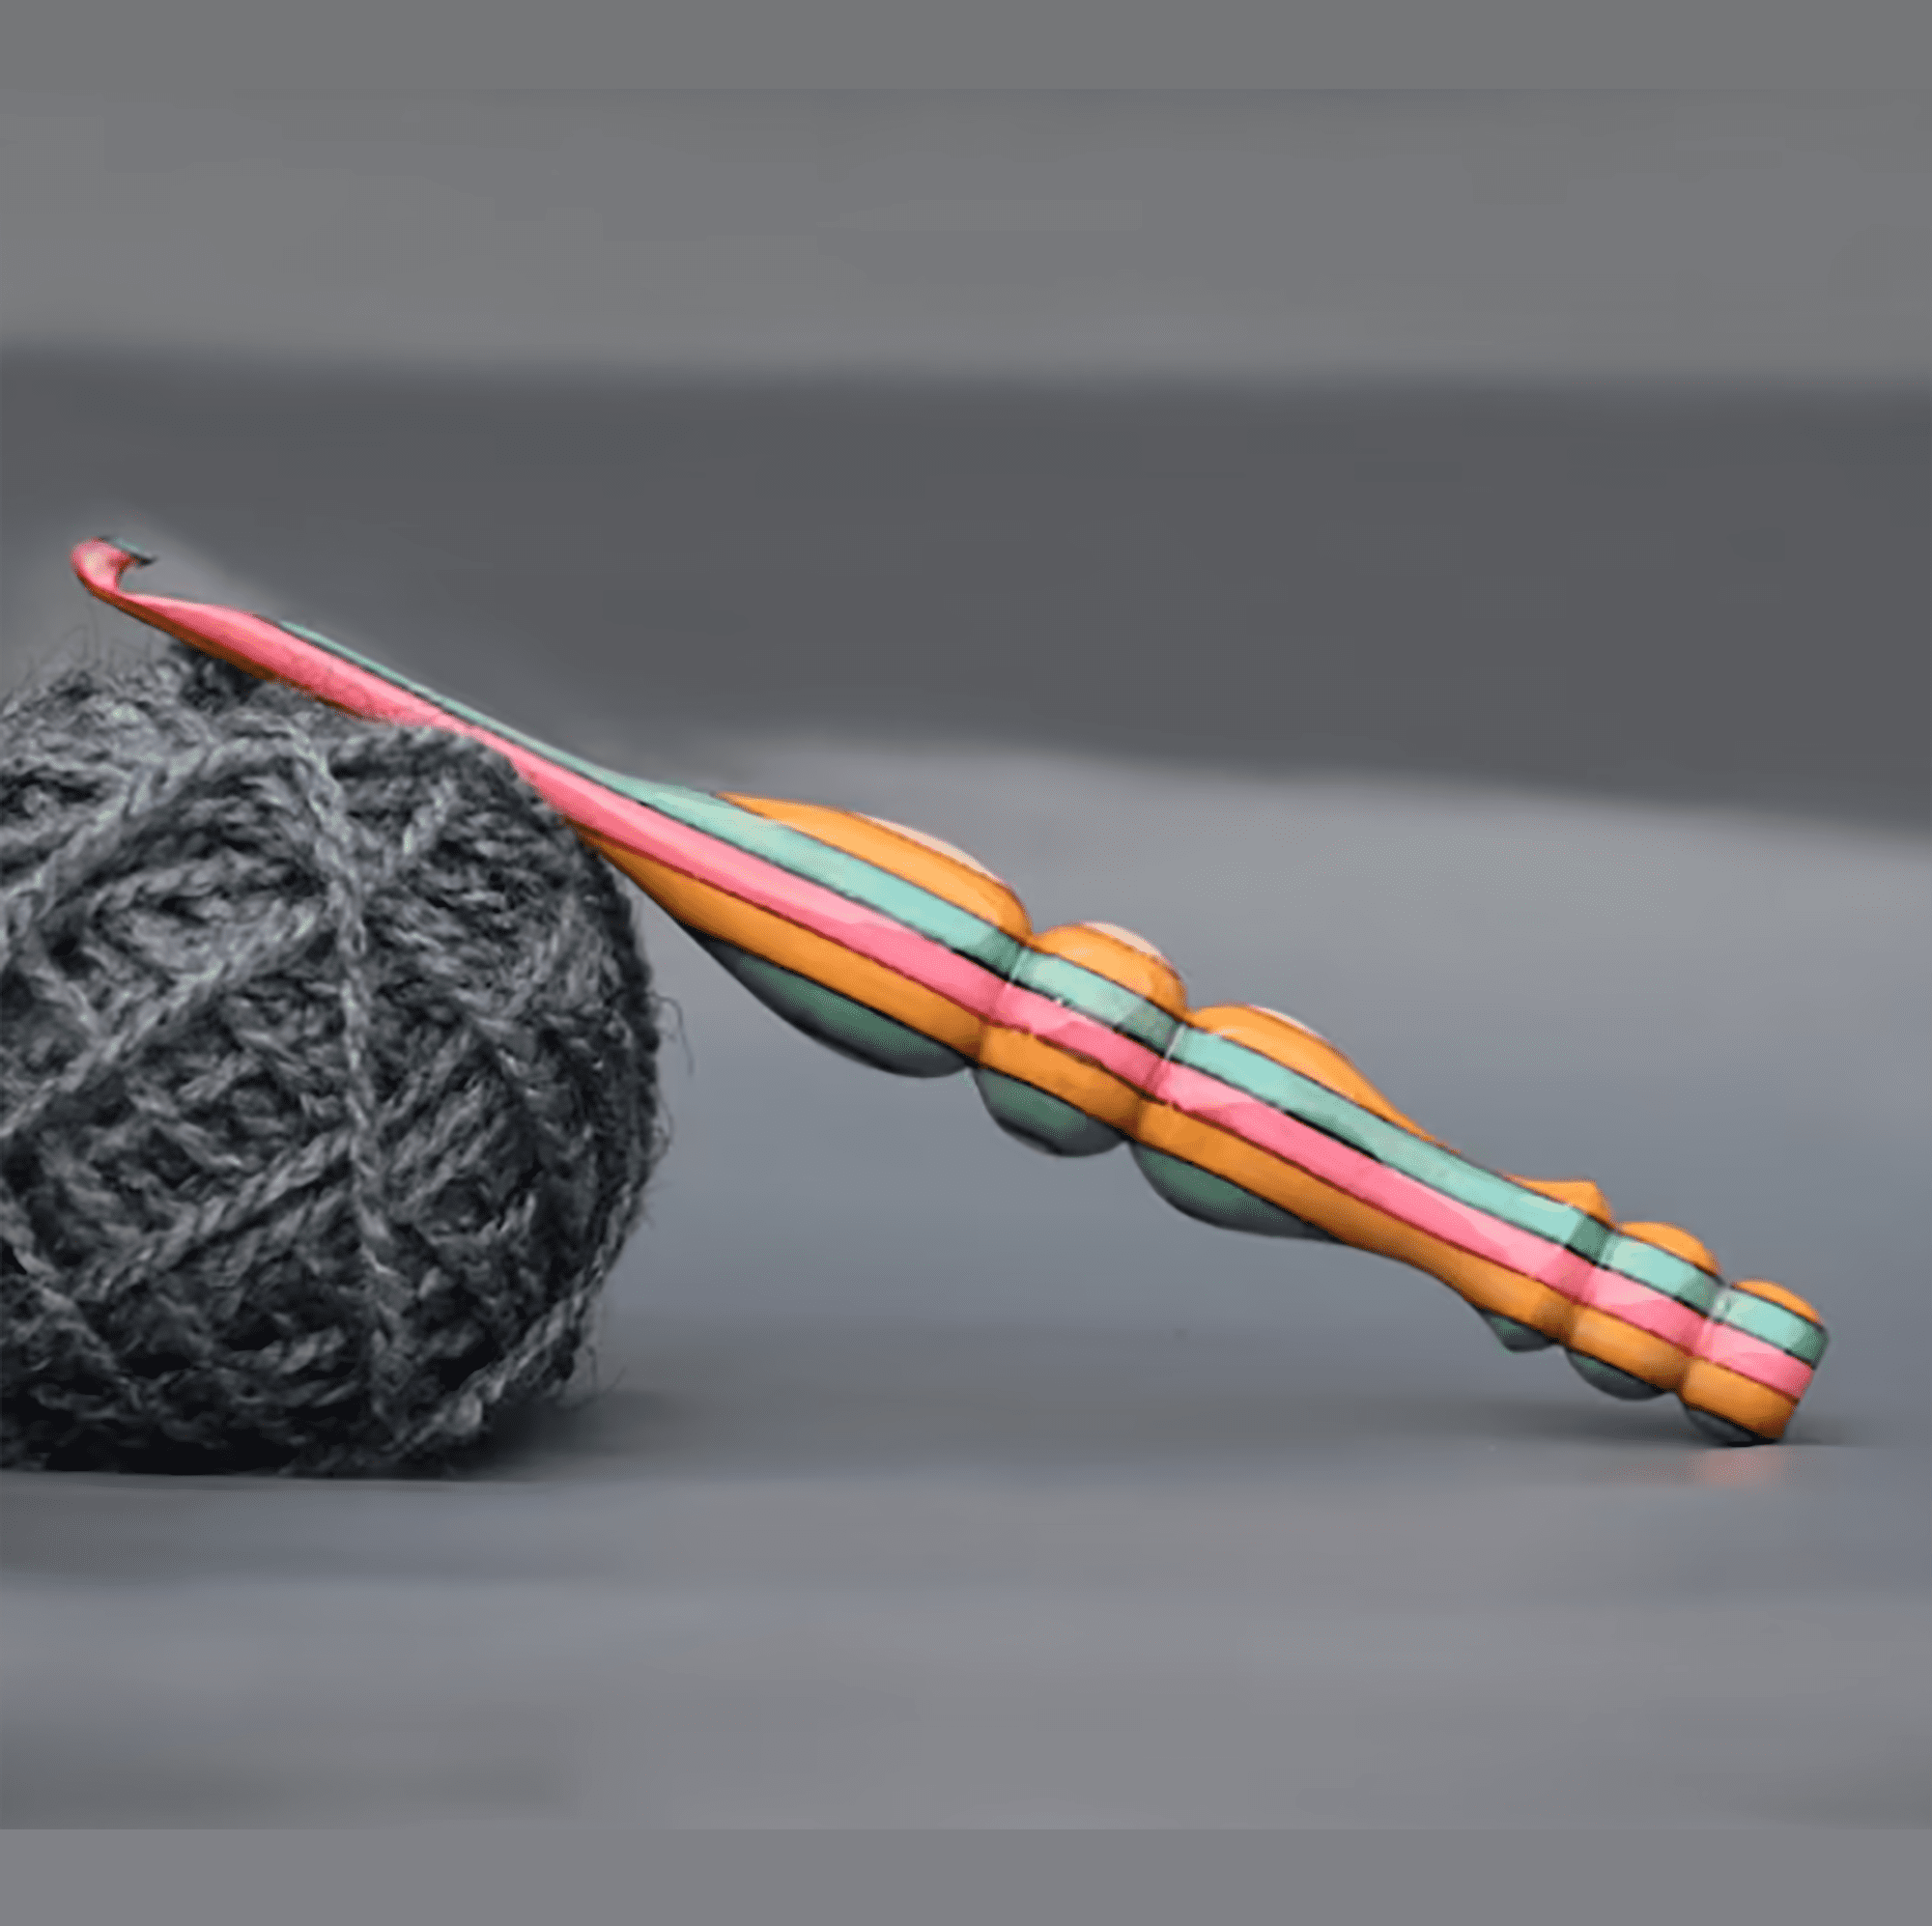 Wooden Handmade Multi color crochet hooks | ergonomic handle knitting hook | Soft Handle Knit Needles 4 types of color used in hook